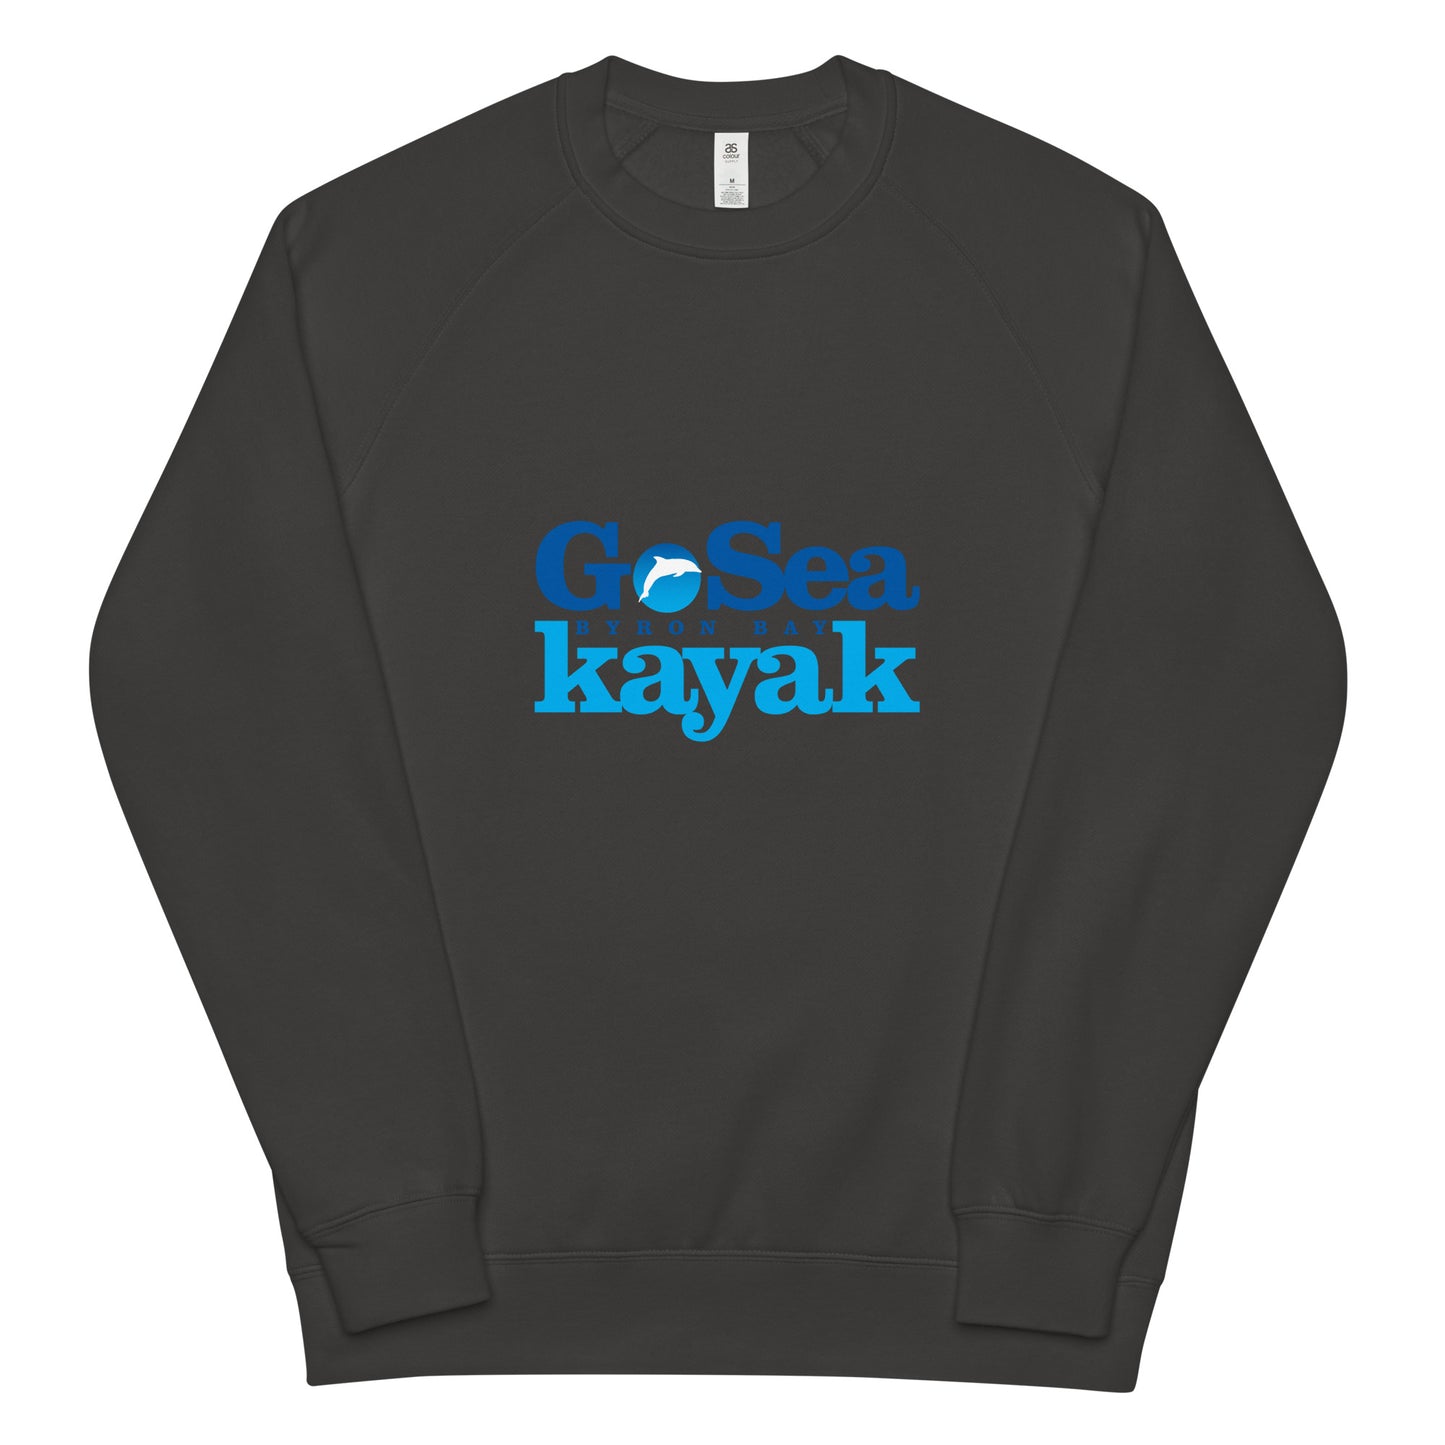  Unisex Sweatshirt - Coal - Front flat lay view - Go Sea Kayak Byron Bay logo on front - Genuine Byron Bay Merchandise | Produced by Go Sea Kayak Byron Bay 